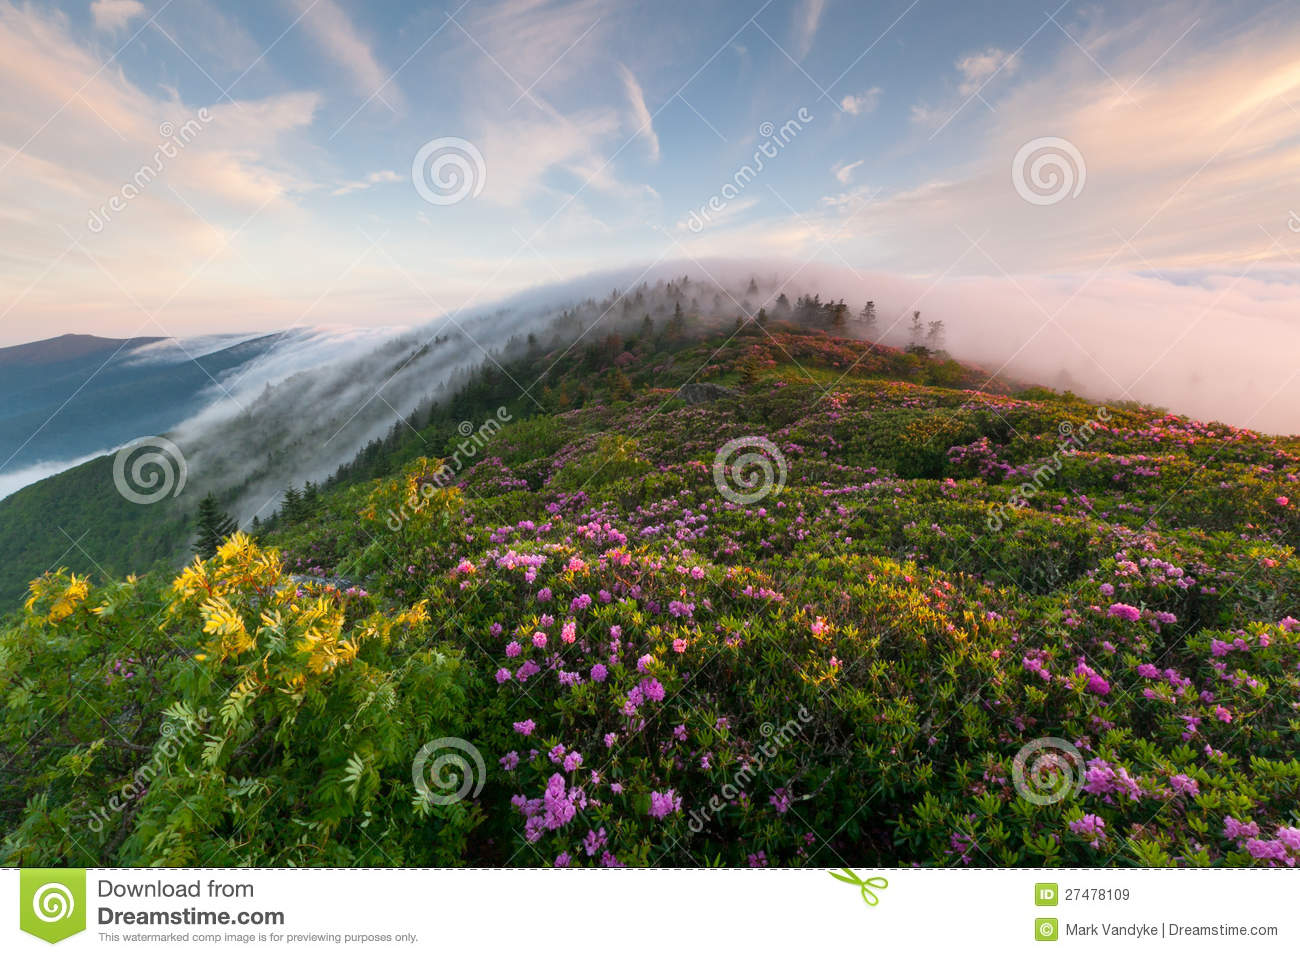 Stock Images  Appalachian Blue Ridge Mountains Bloom  Image  27478109